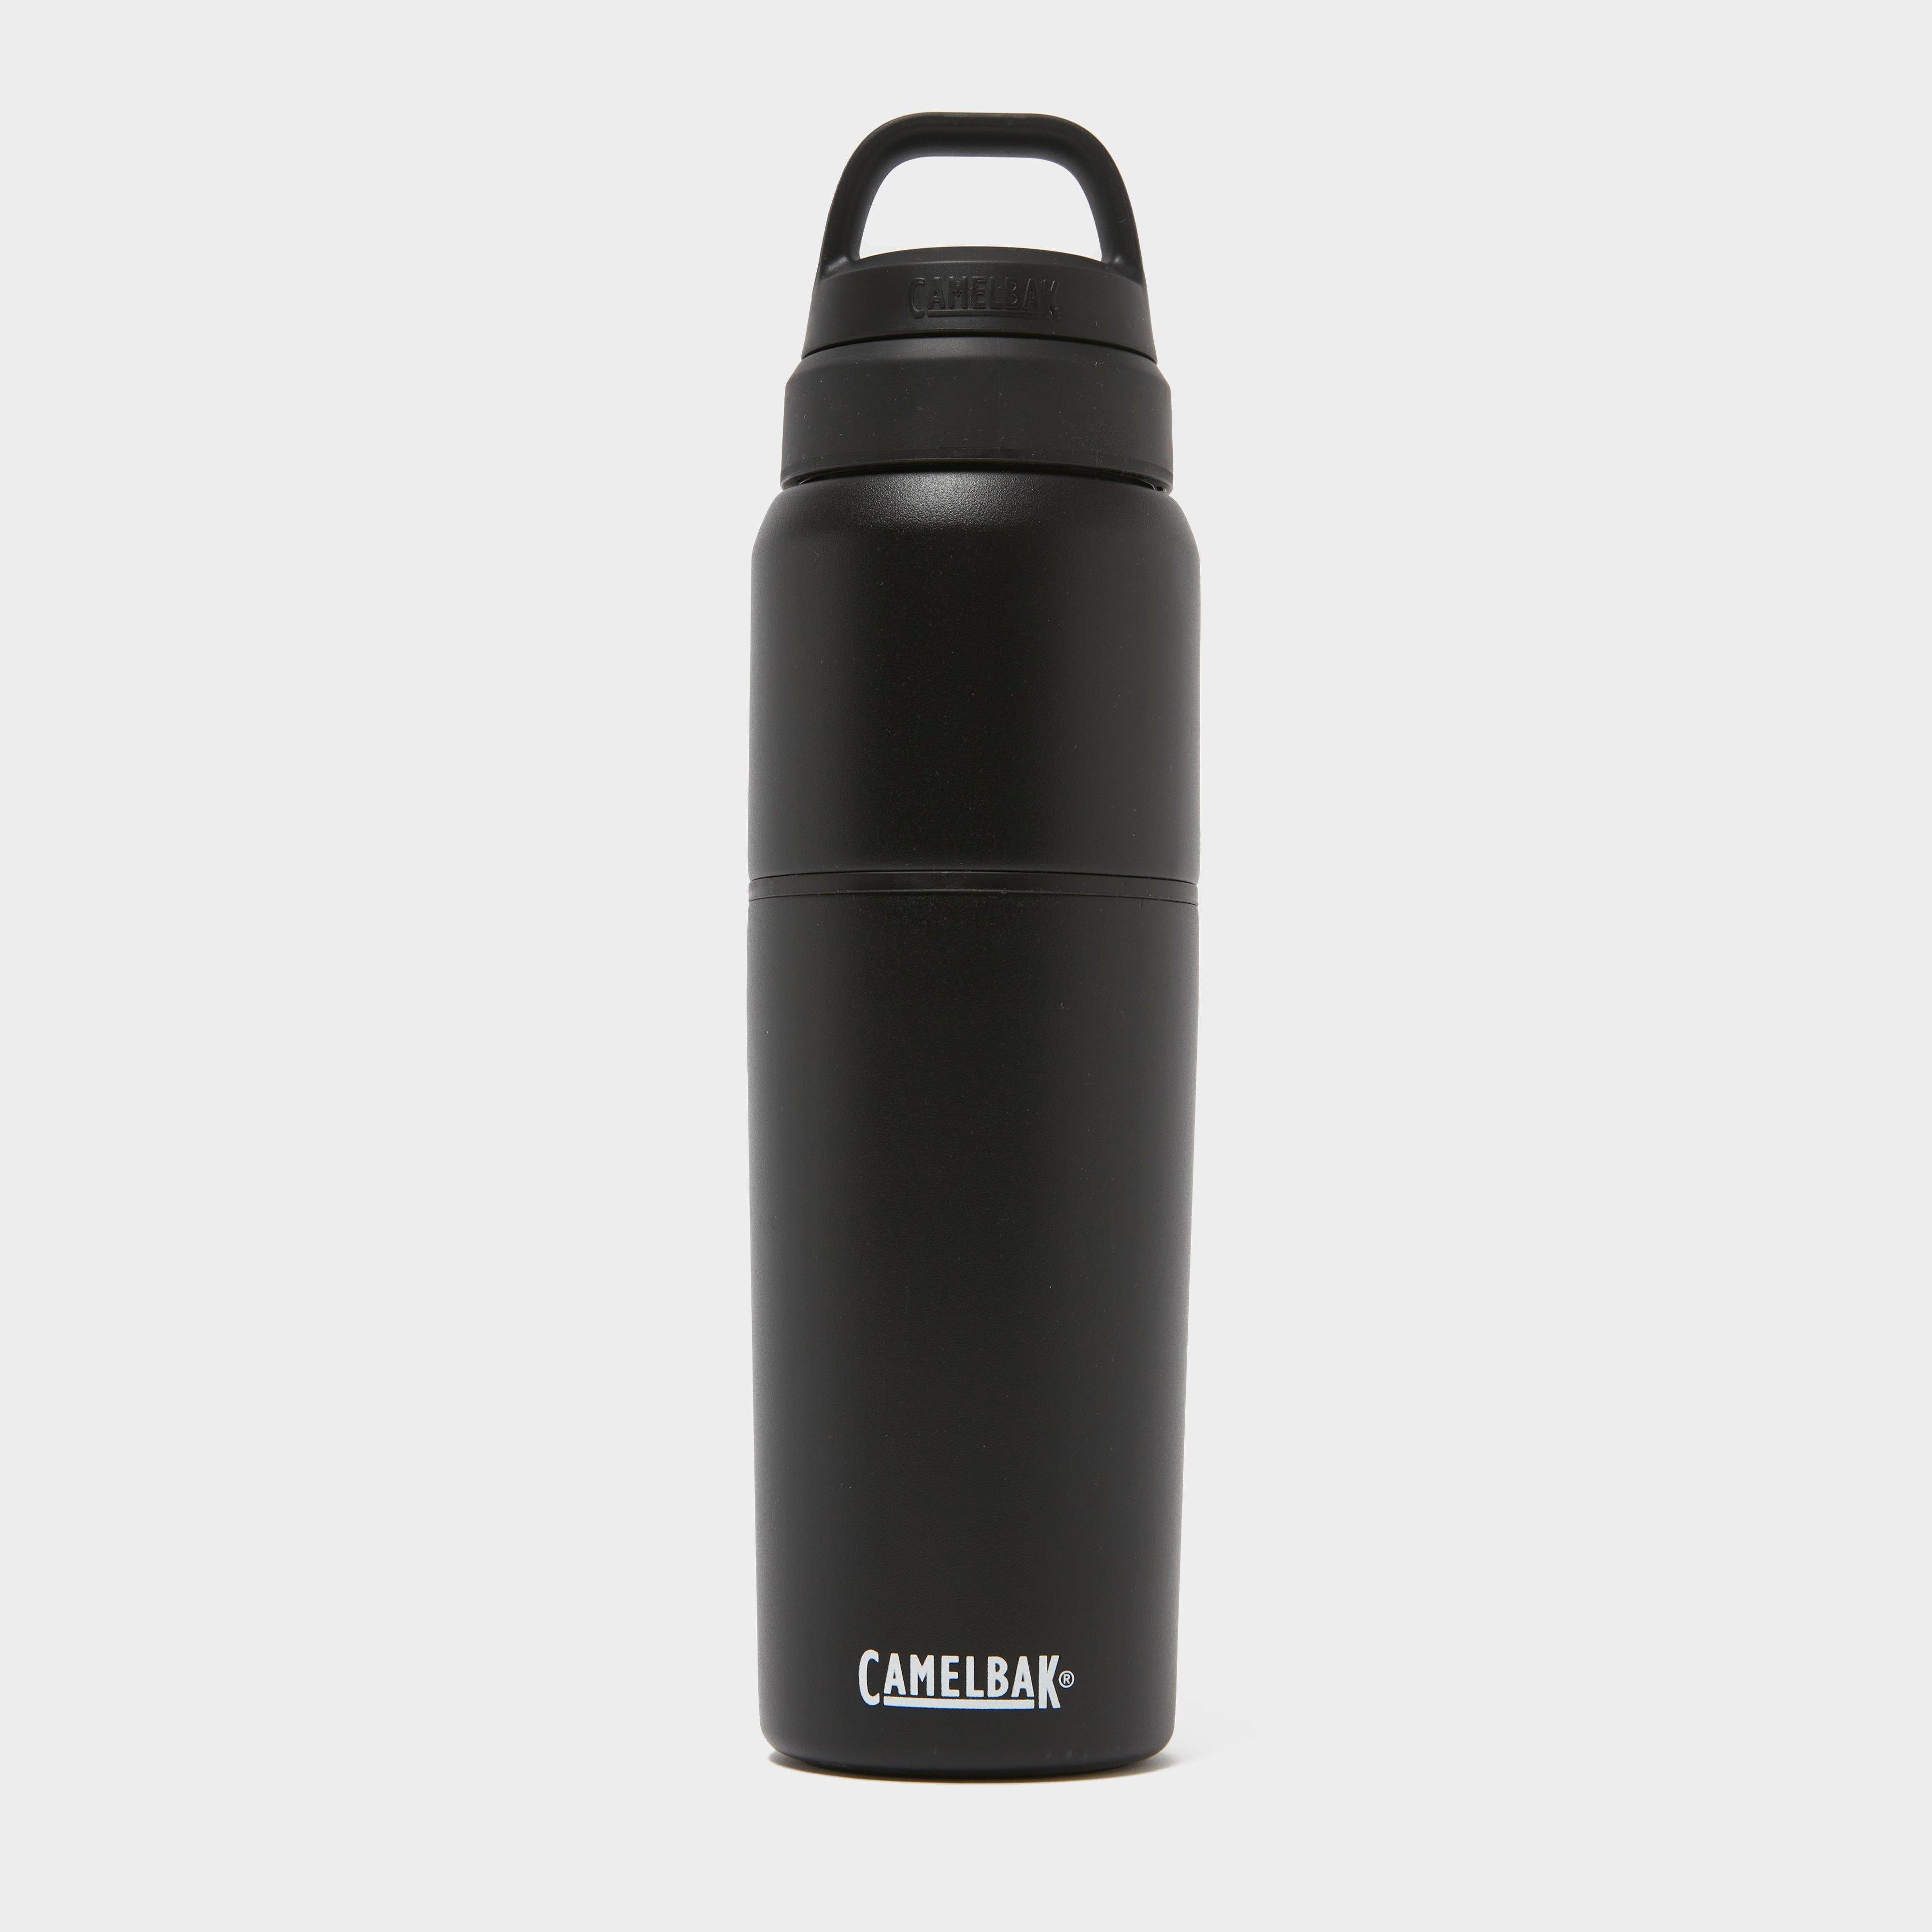 Camelbak Multibev Sst Vaccum Insulated 650ml Bottle With 480ml Cup - Black/black  Black/black